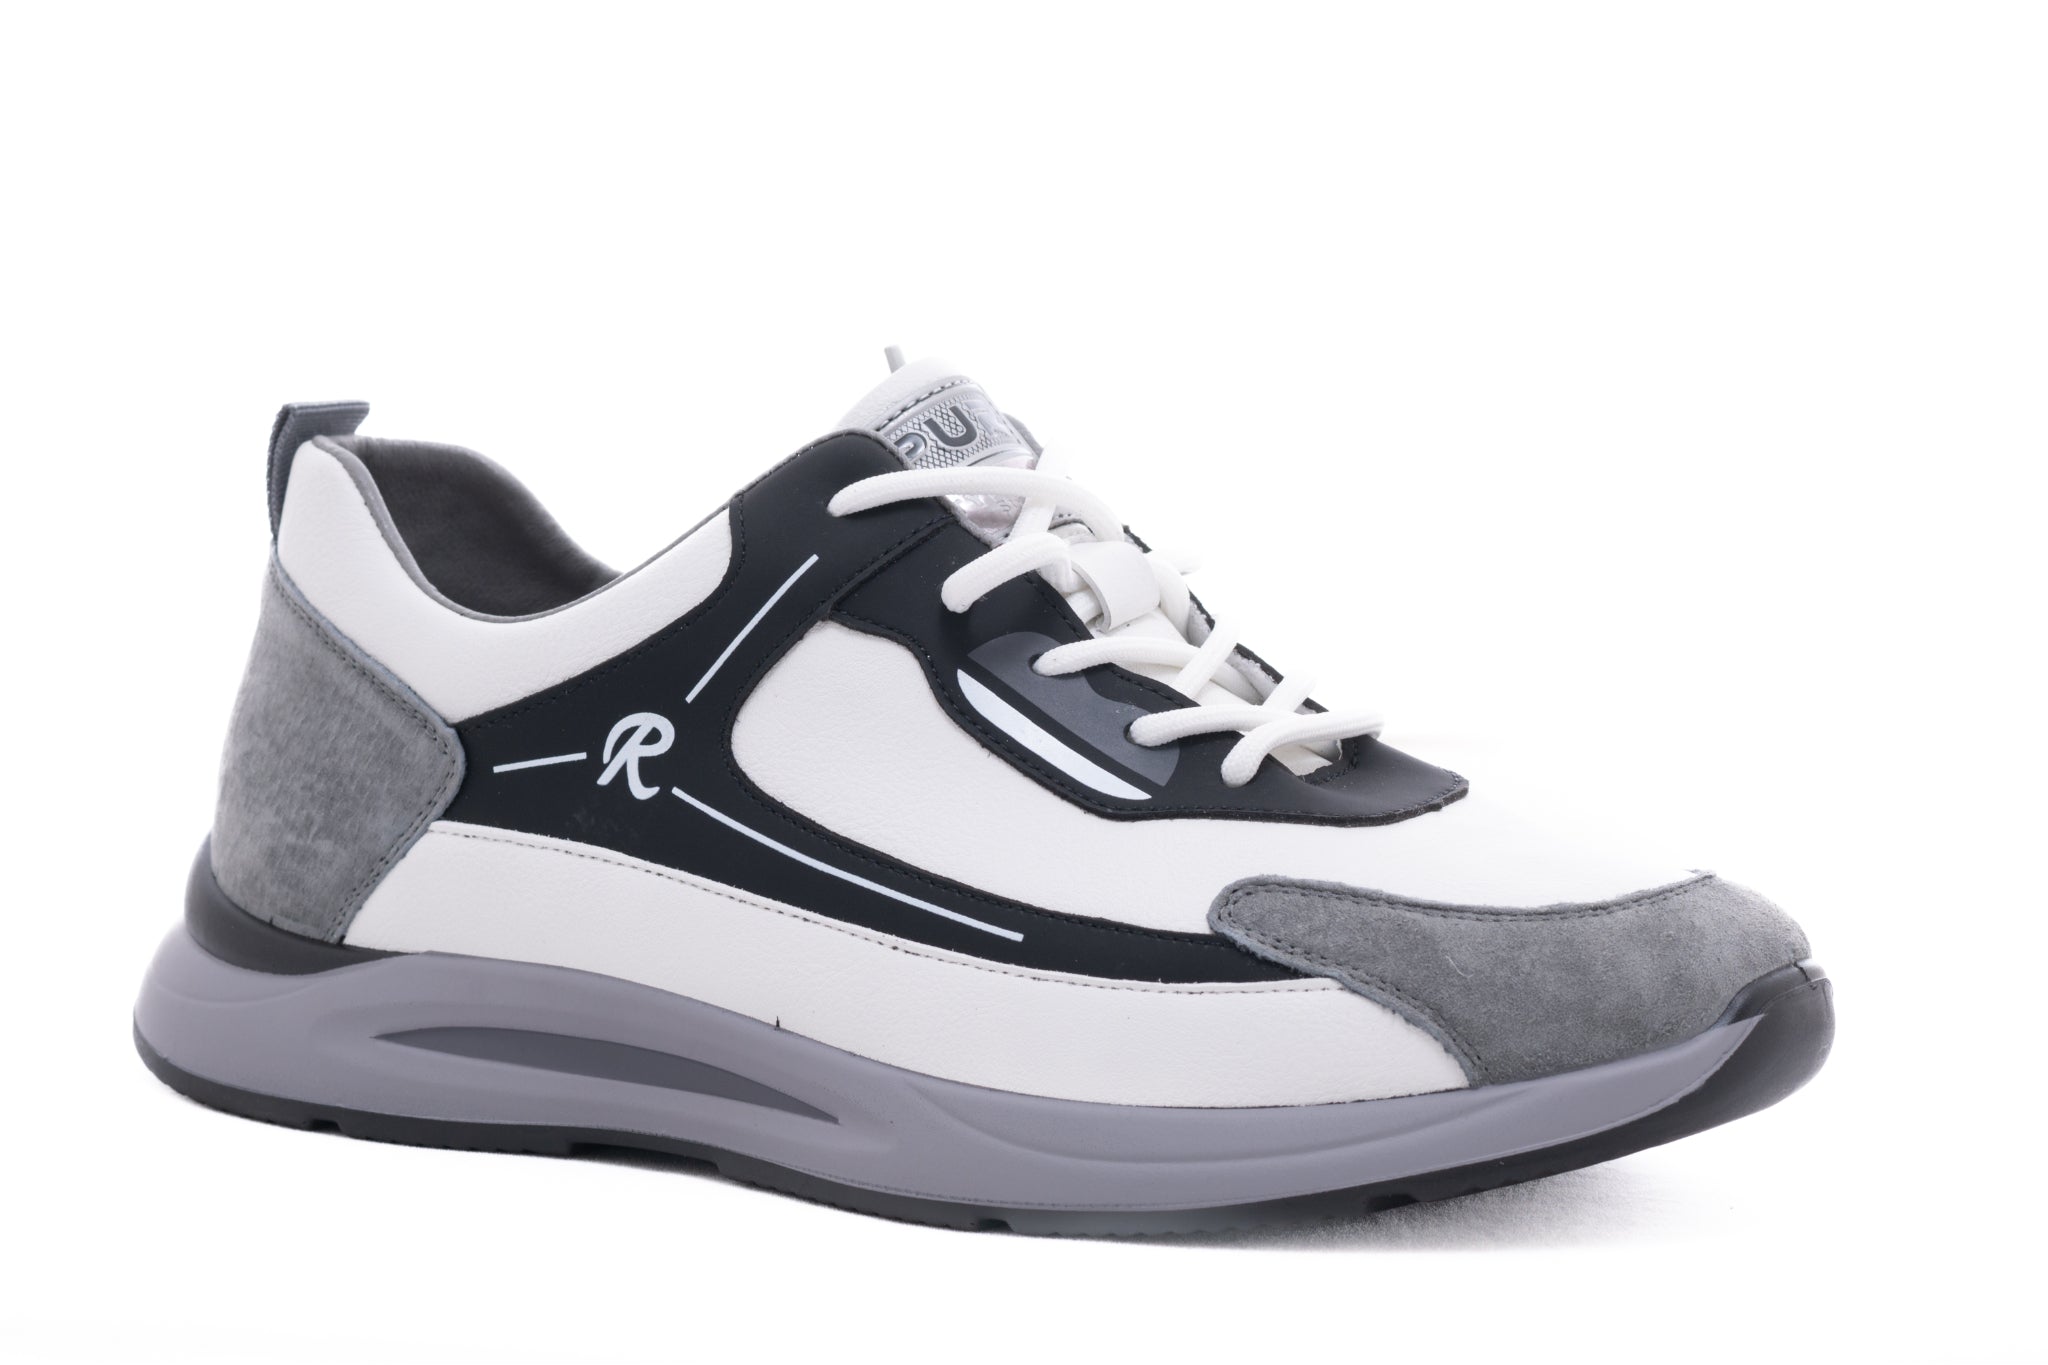 Pantofi barbati casual piele naturala FRANCO GERARDO 10-983 alb negru